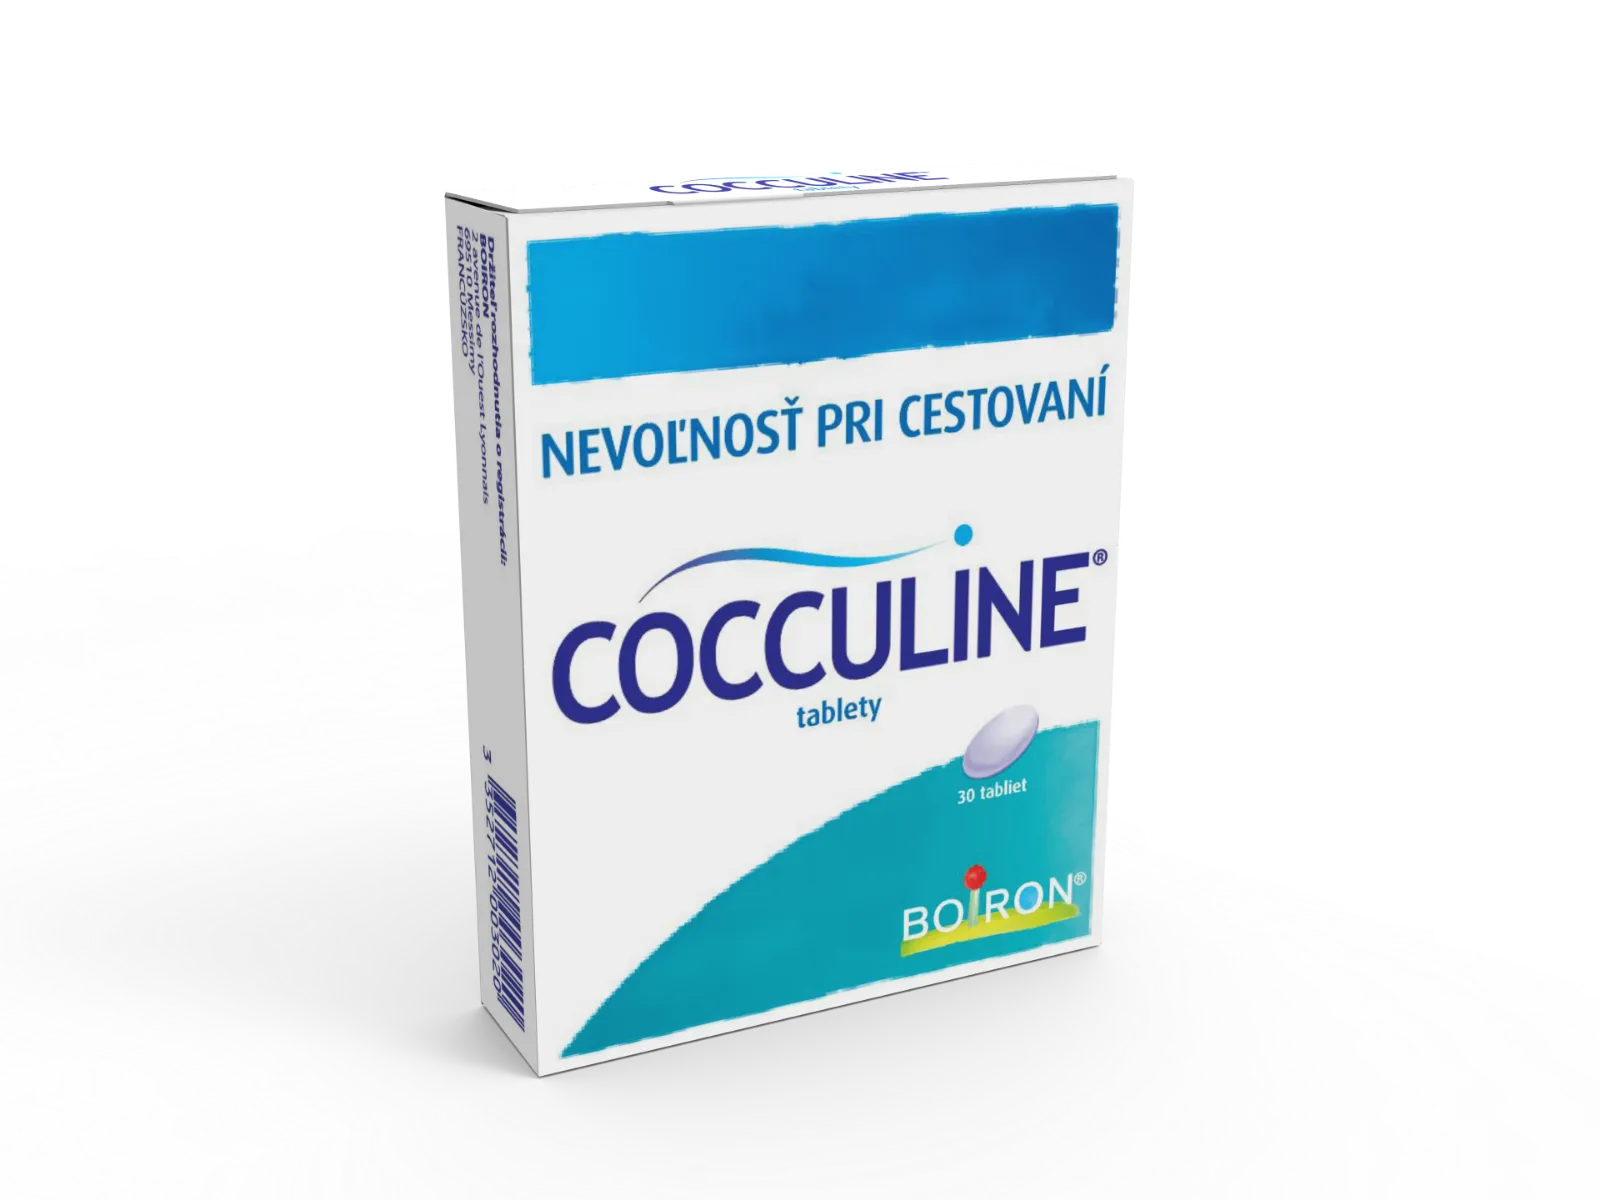 COCCULINE 1×30 tbl, homeopatický liek